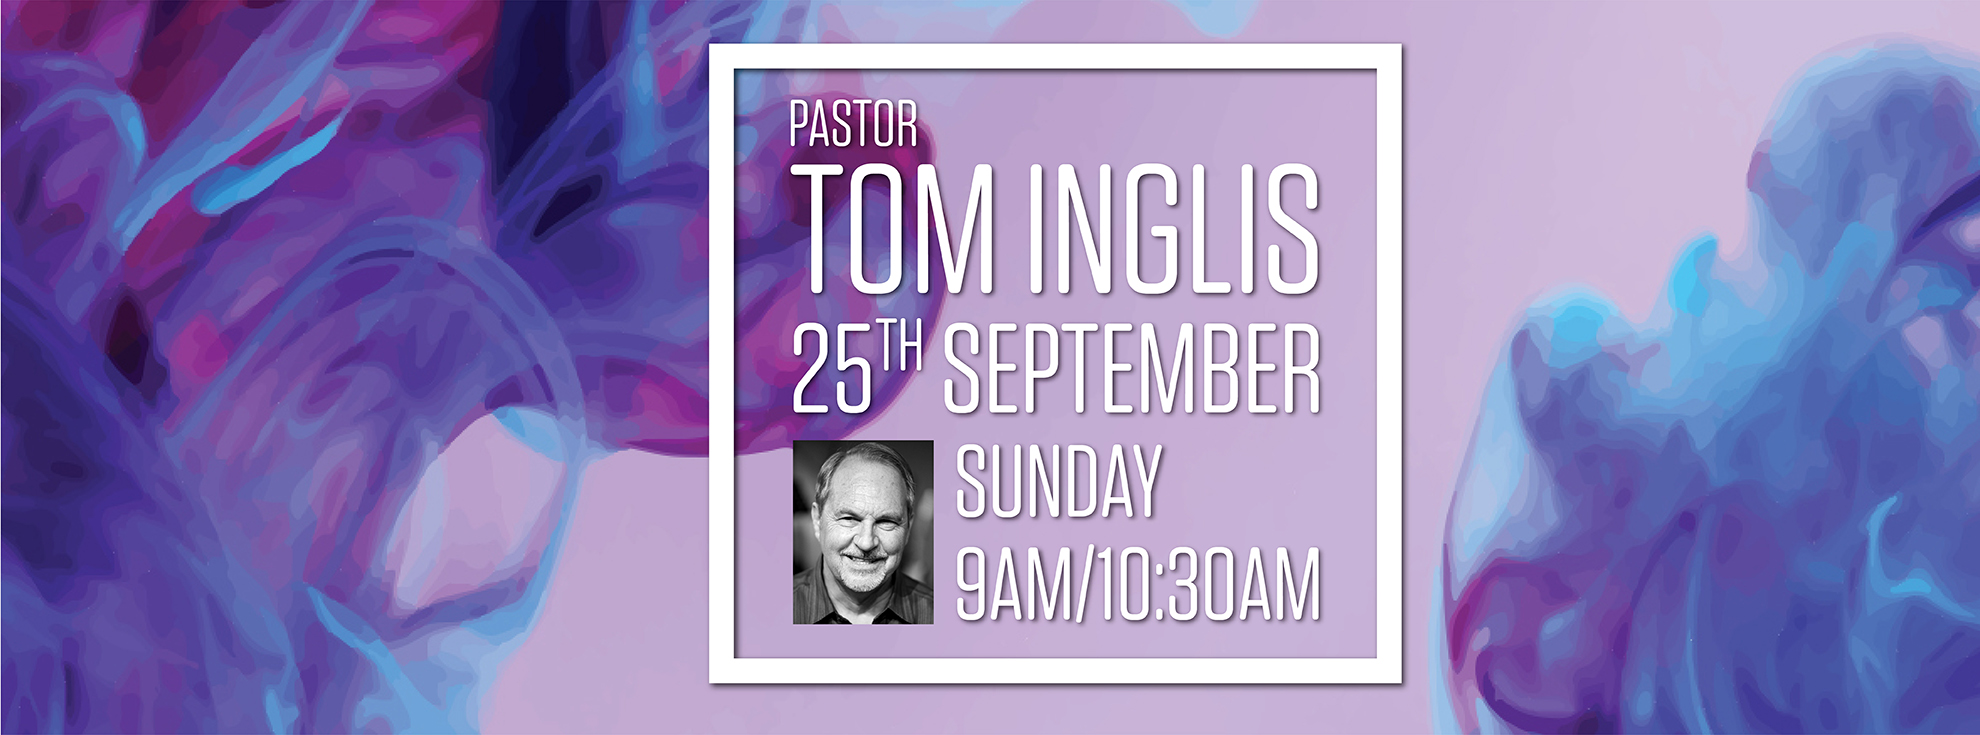 Sunday 25th September: Ps Tom Inglis